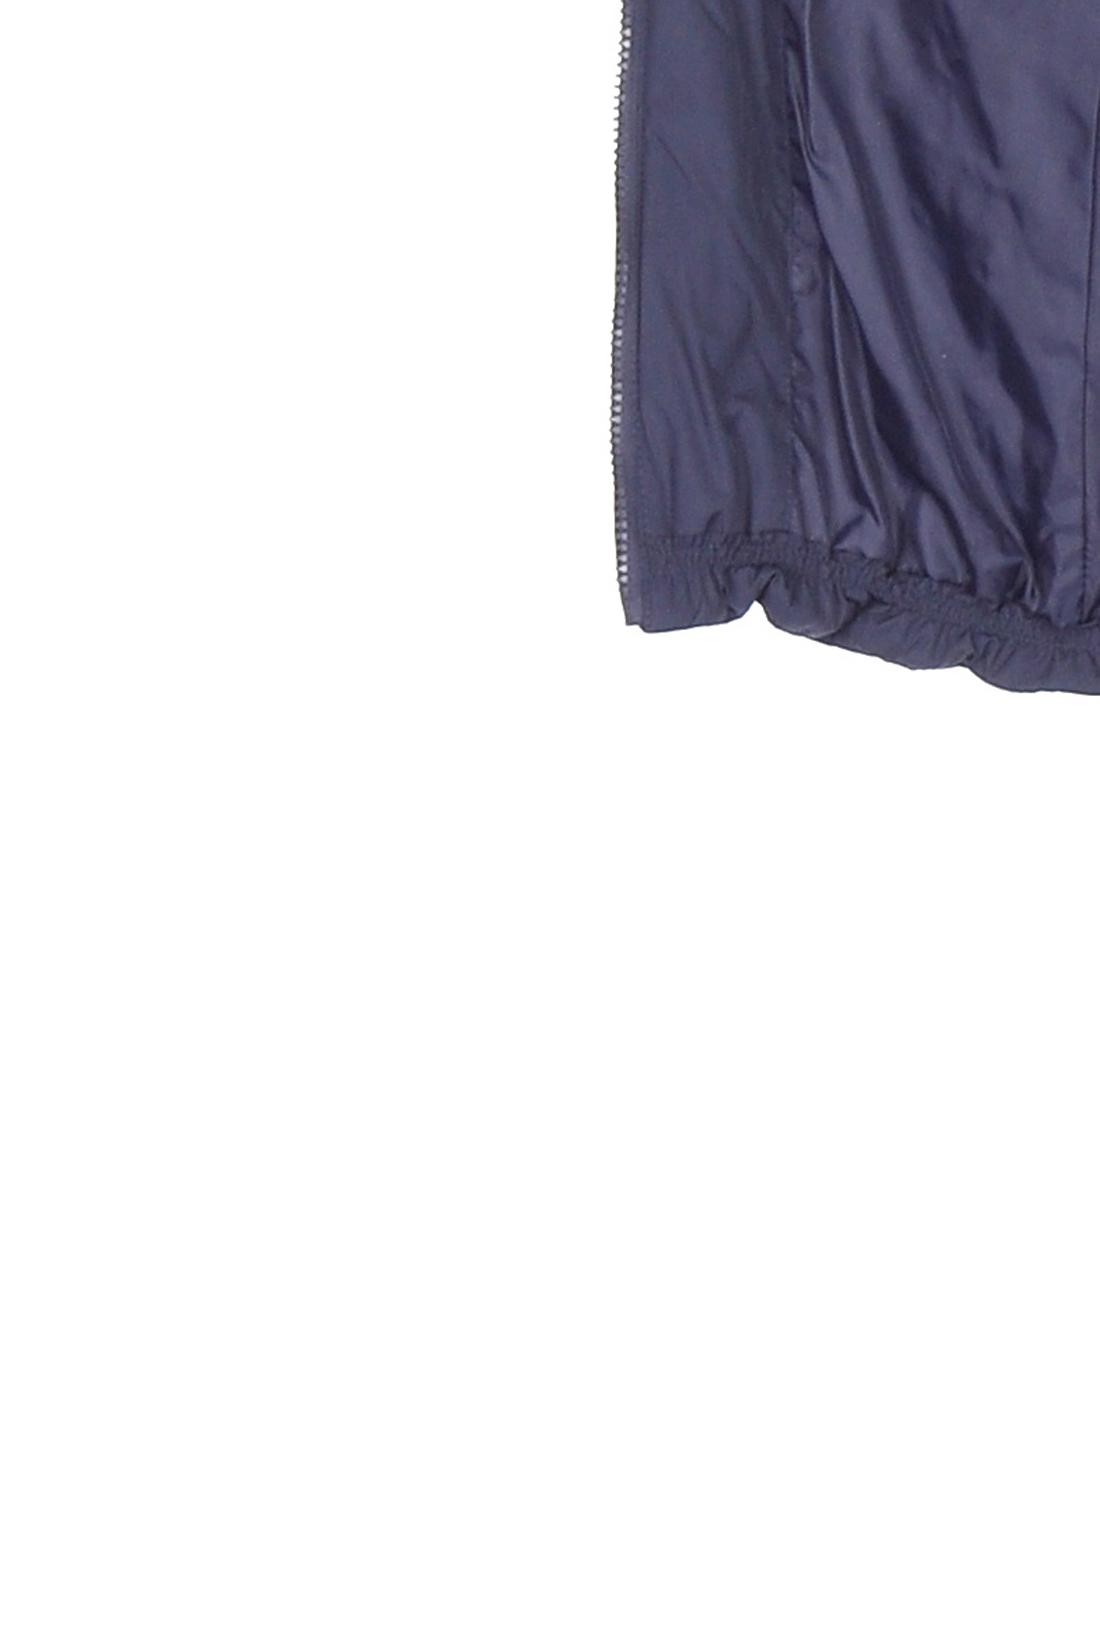 Куртка с вязаными манжетами (арт. baon B038002), размер M, цвет синий Куртка с вязаными манжетами (арт. baon B038002) - фото 5